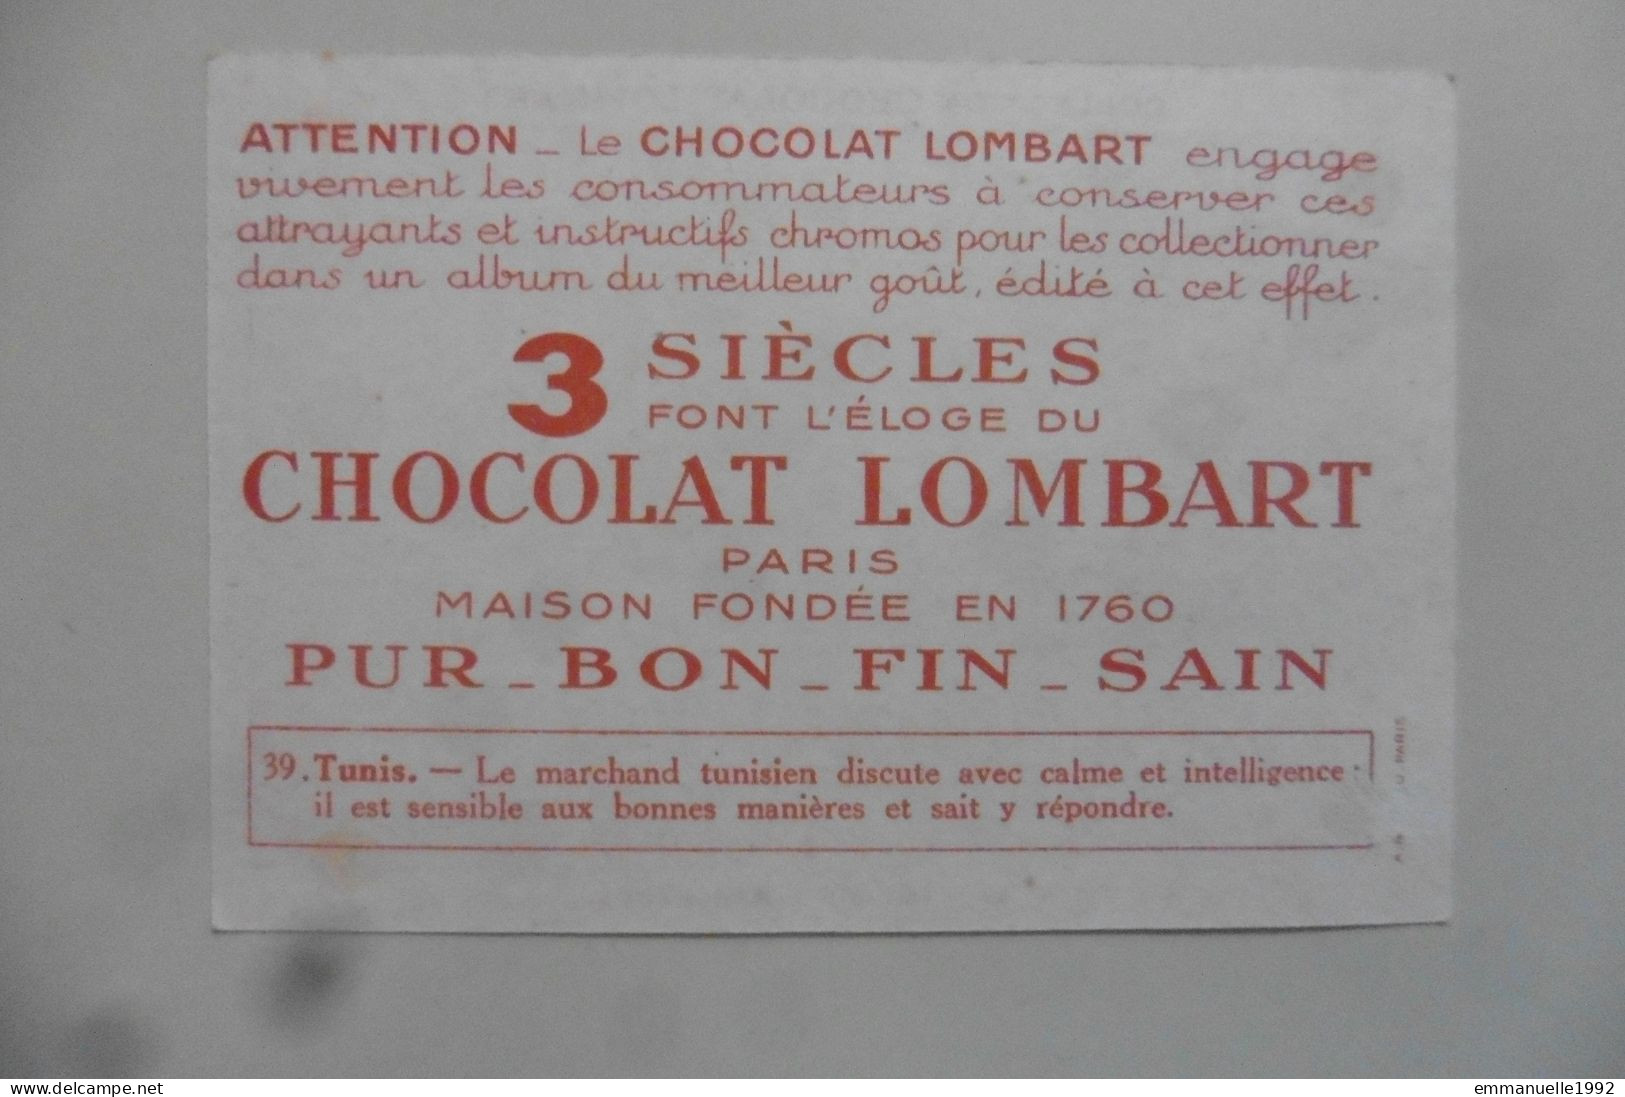 Chromo Chocolat Lombart - Tunisie - Tunis N°39 Marchands Souks Kasbah - Lombart